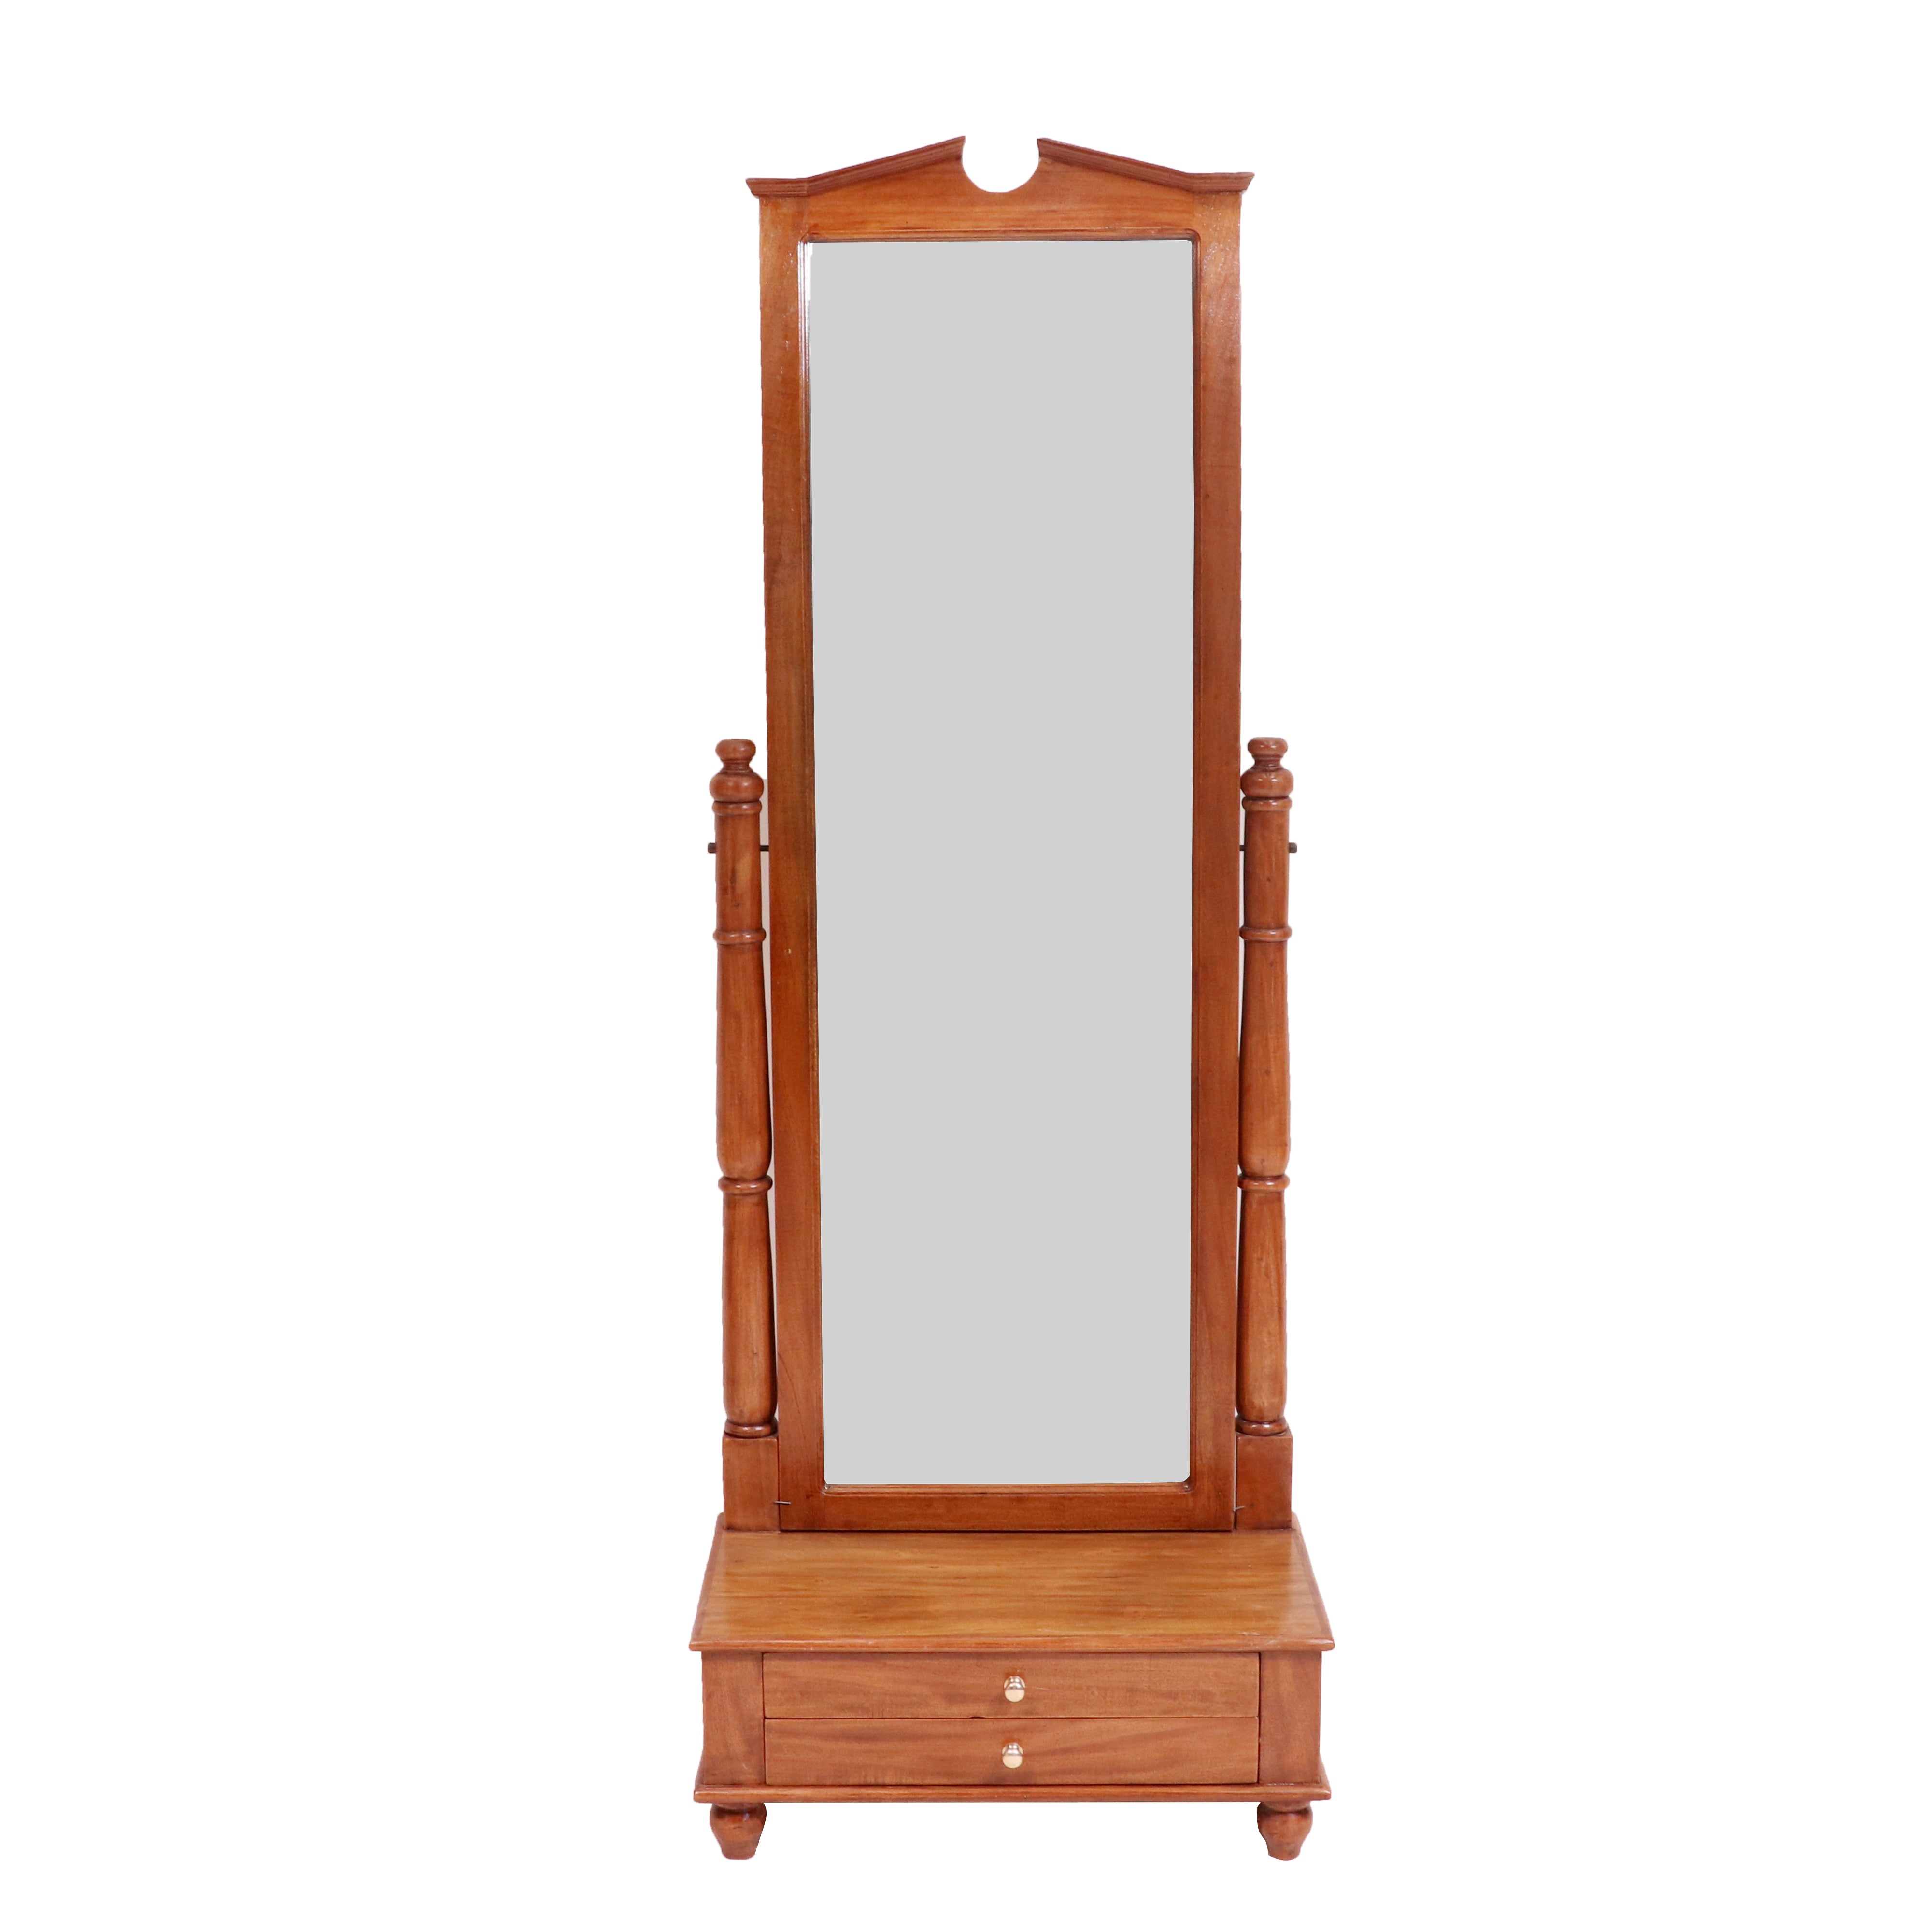 Compact teak wood revolving mirror stylish sleek dressing table Dressing Table